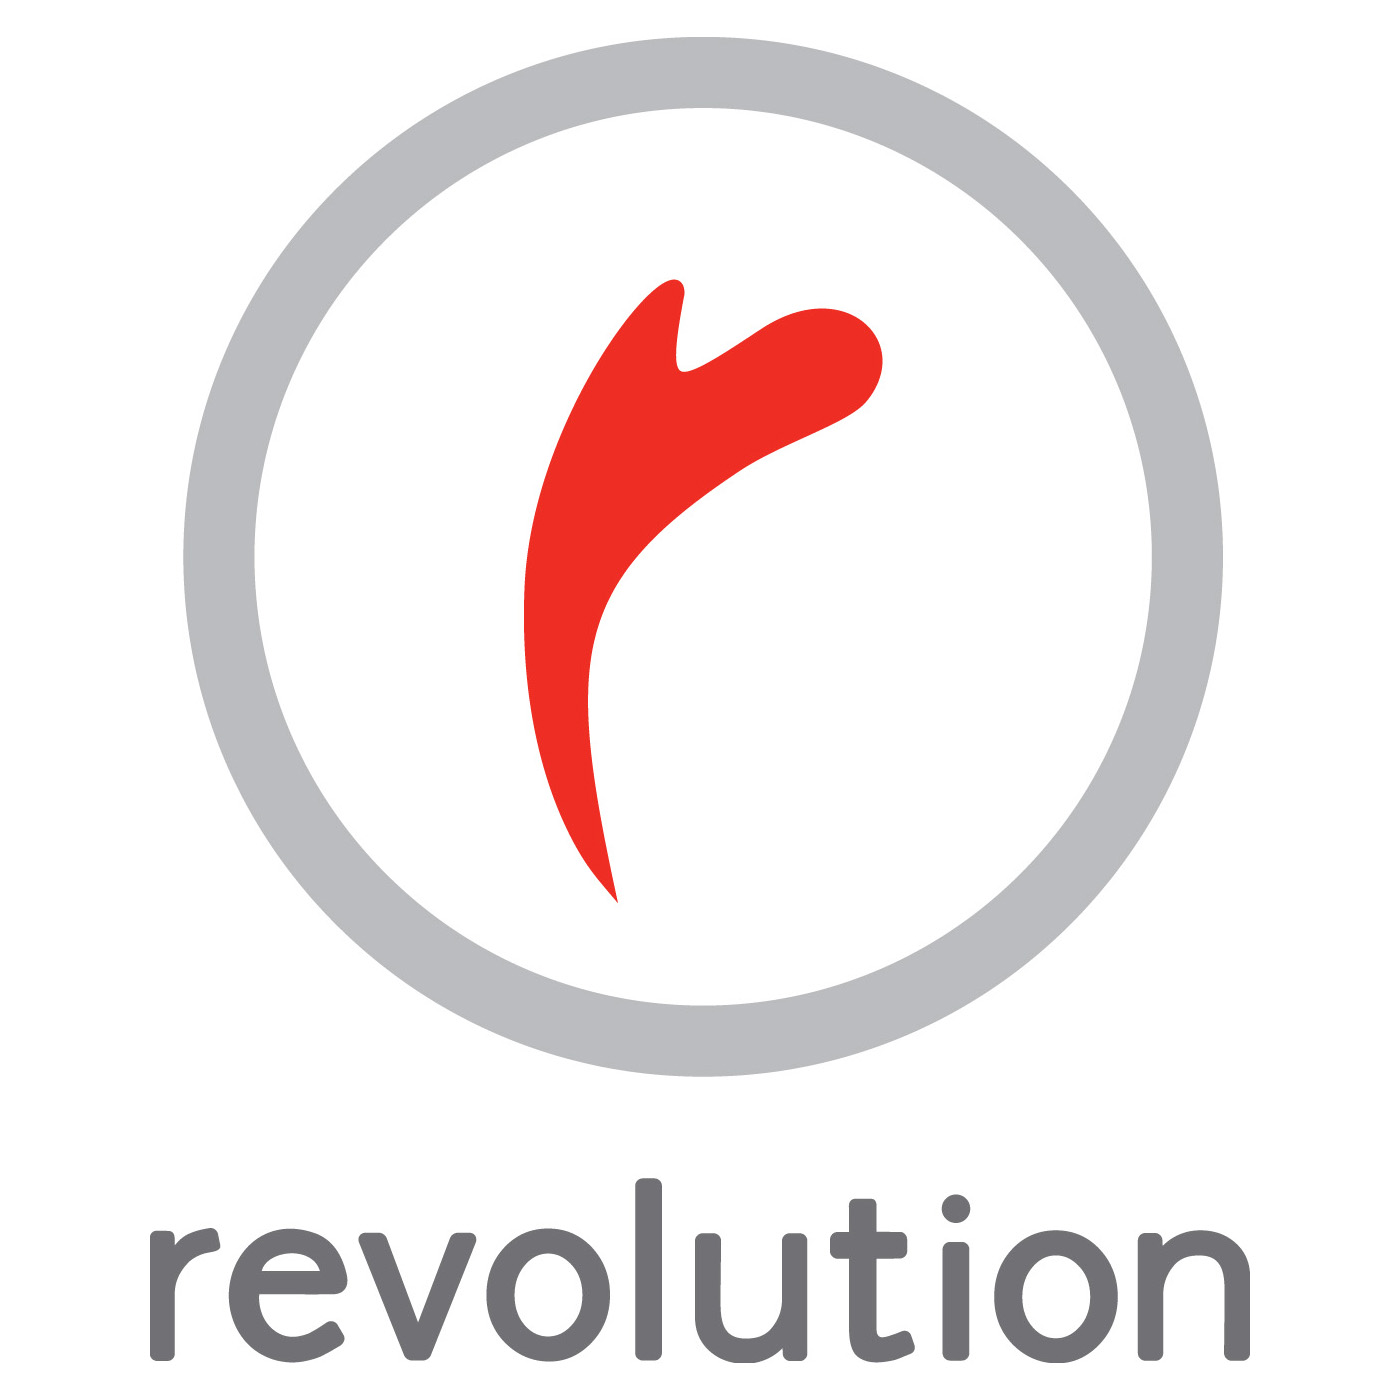 Black Round Illustration Of Revolution Hand Icon Logo Design Idea Royalty  Free SVG, Cliparts, Vectors, and Stock Illustration. Image 133235945.